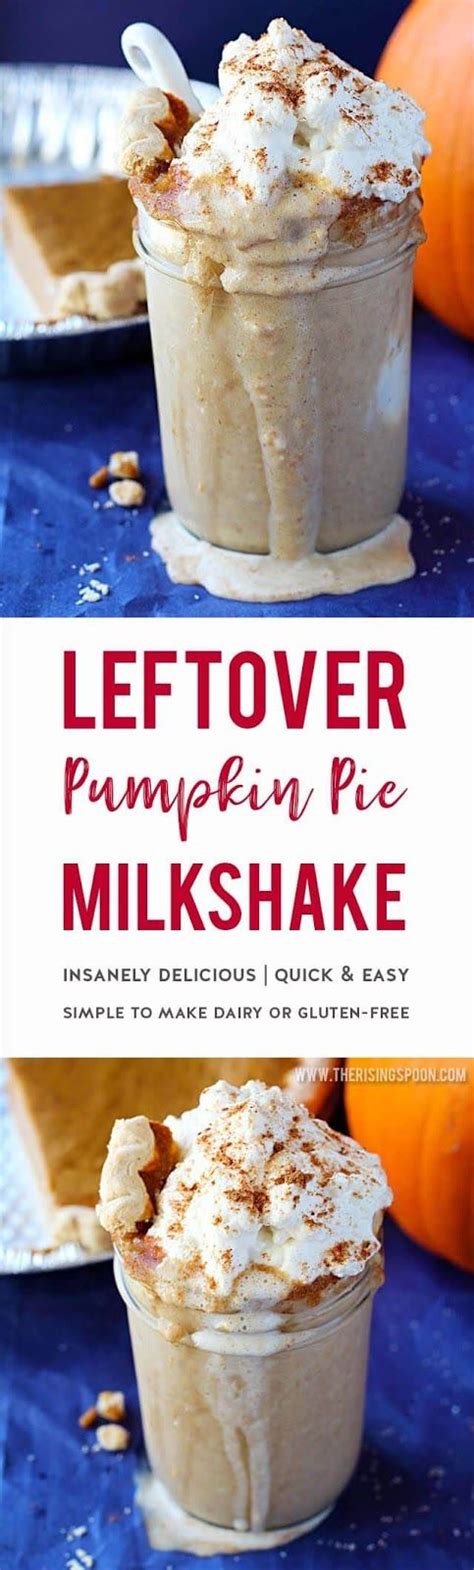 Leftover Pumpkin Pie Milkshake Recipe Diy Food Recipes Yummy Milkshake Recipes Diy Easy